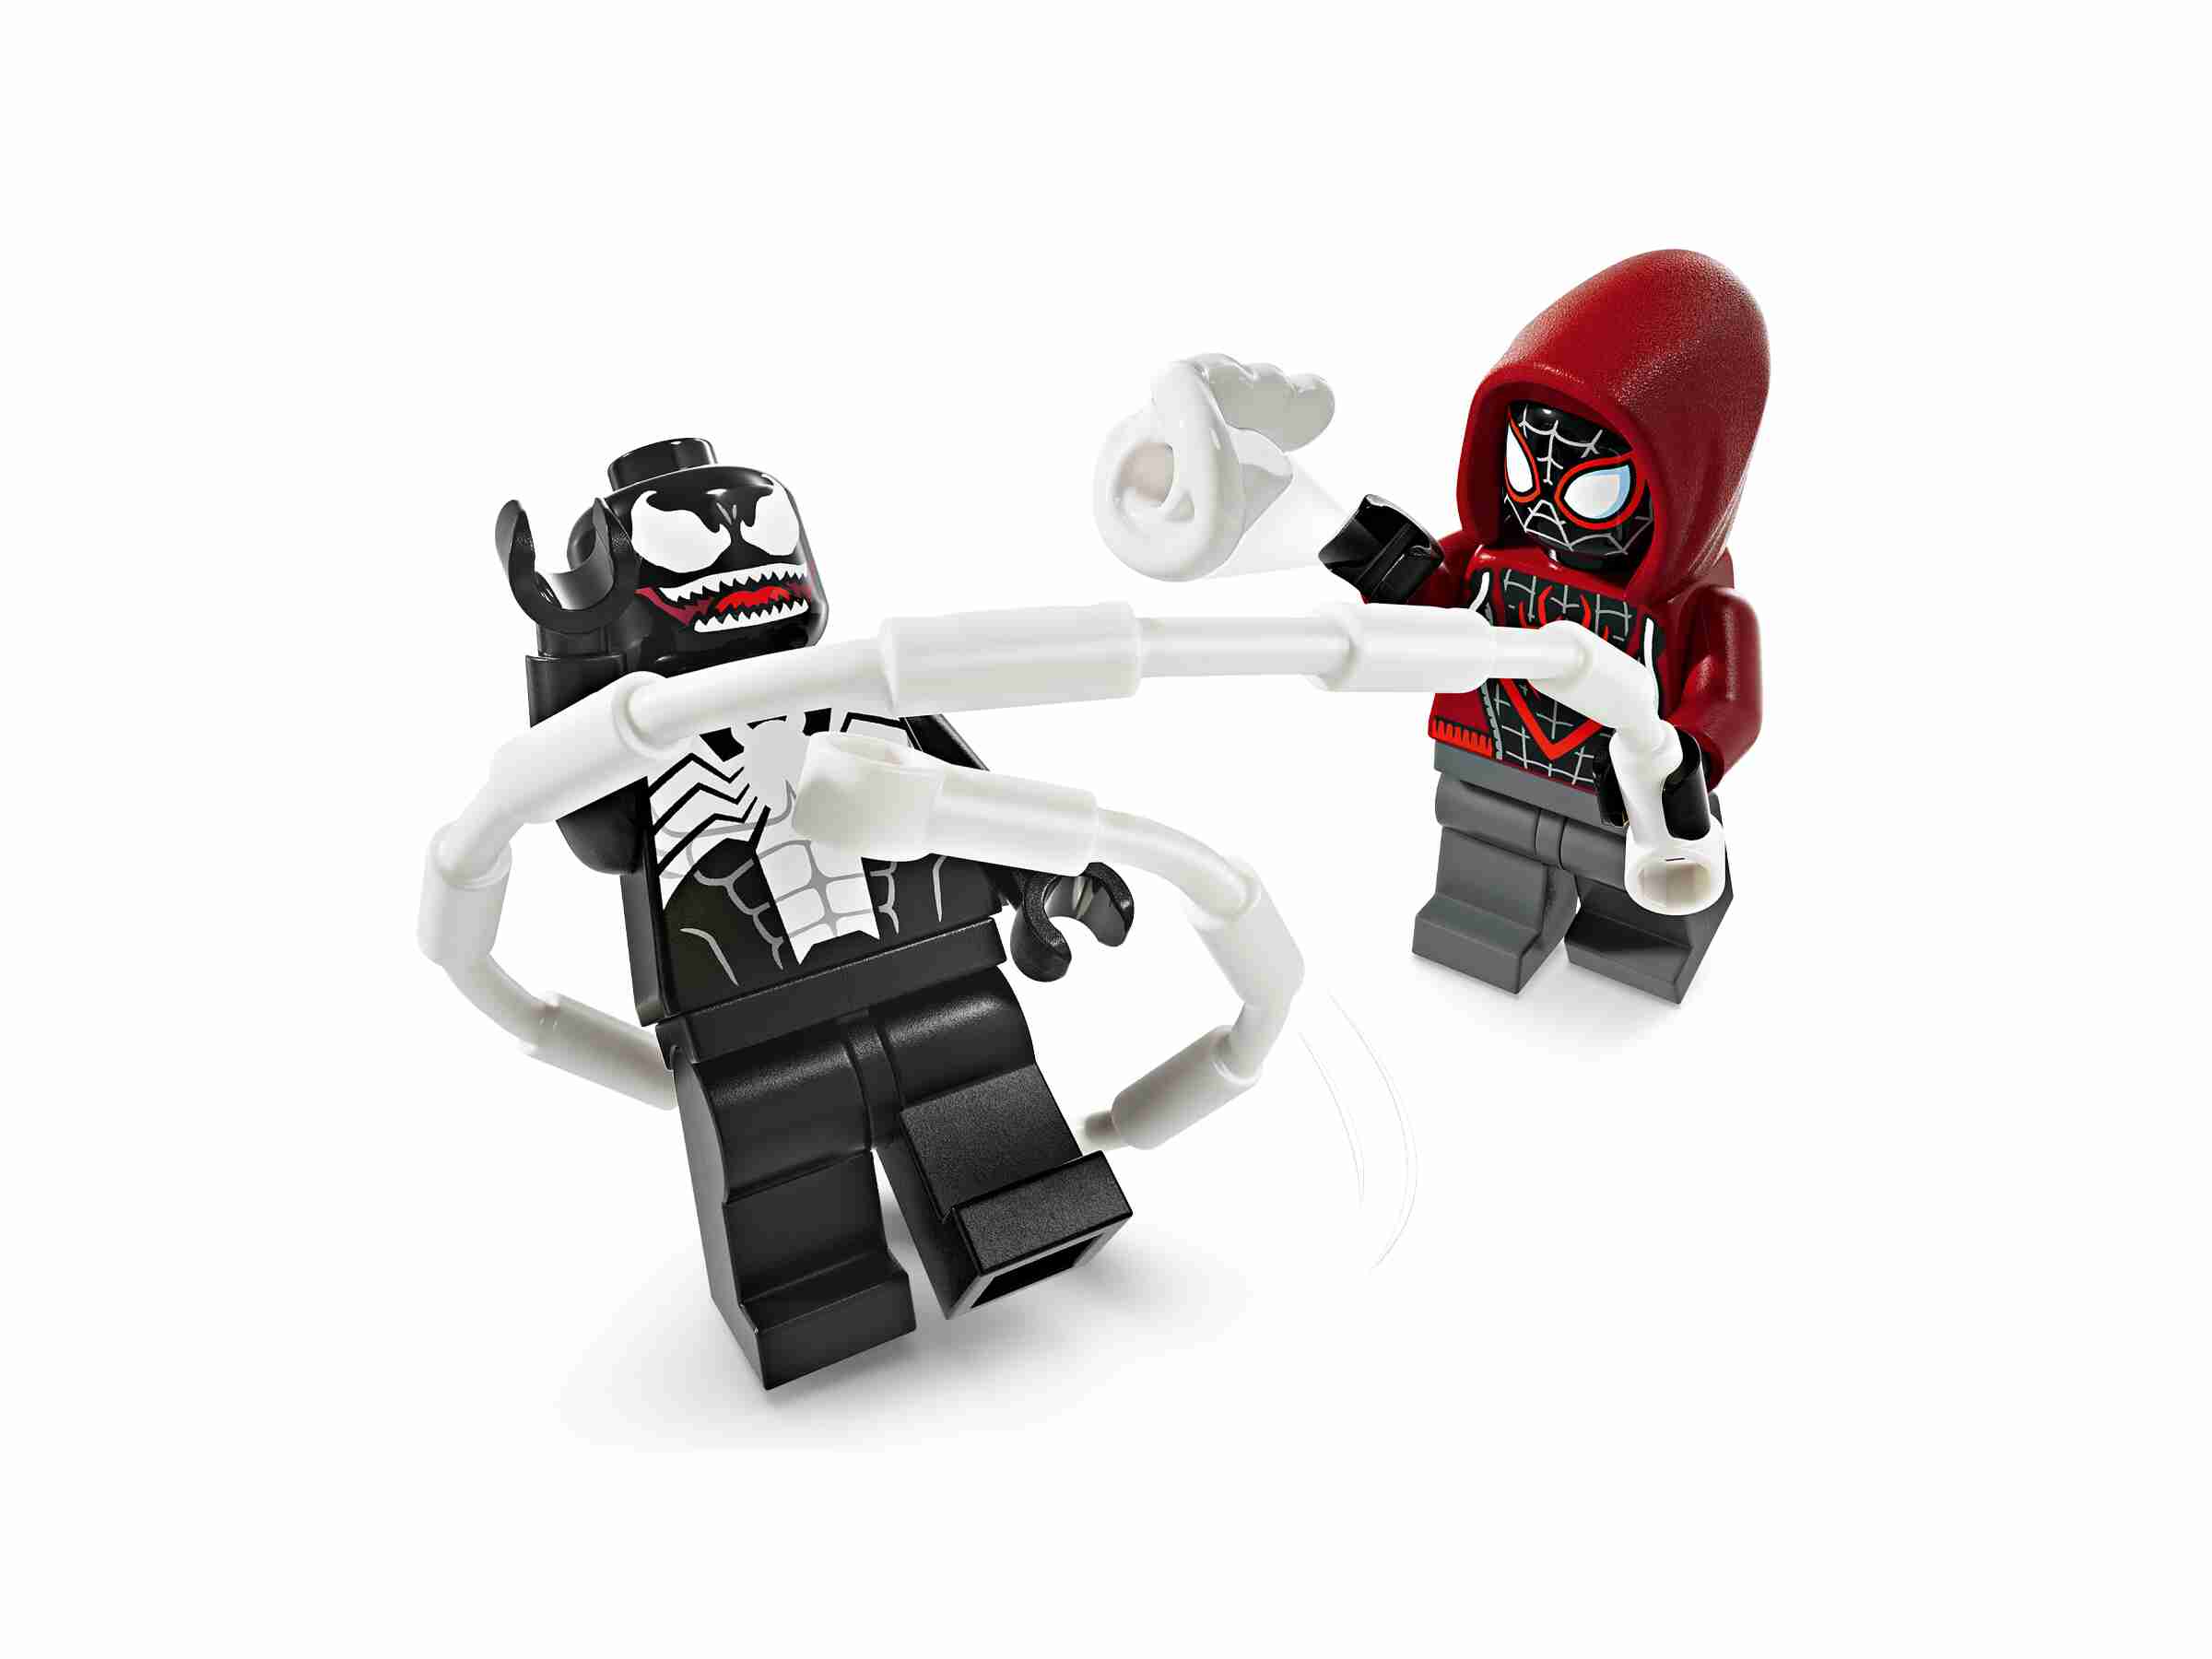 LEGO 76276 Marvel Venom Mech vs. Miles Morales, Beweglicher Mech, 2 Minifiguren